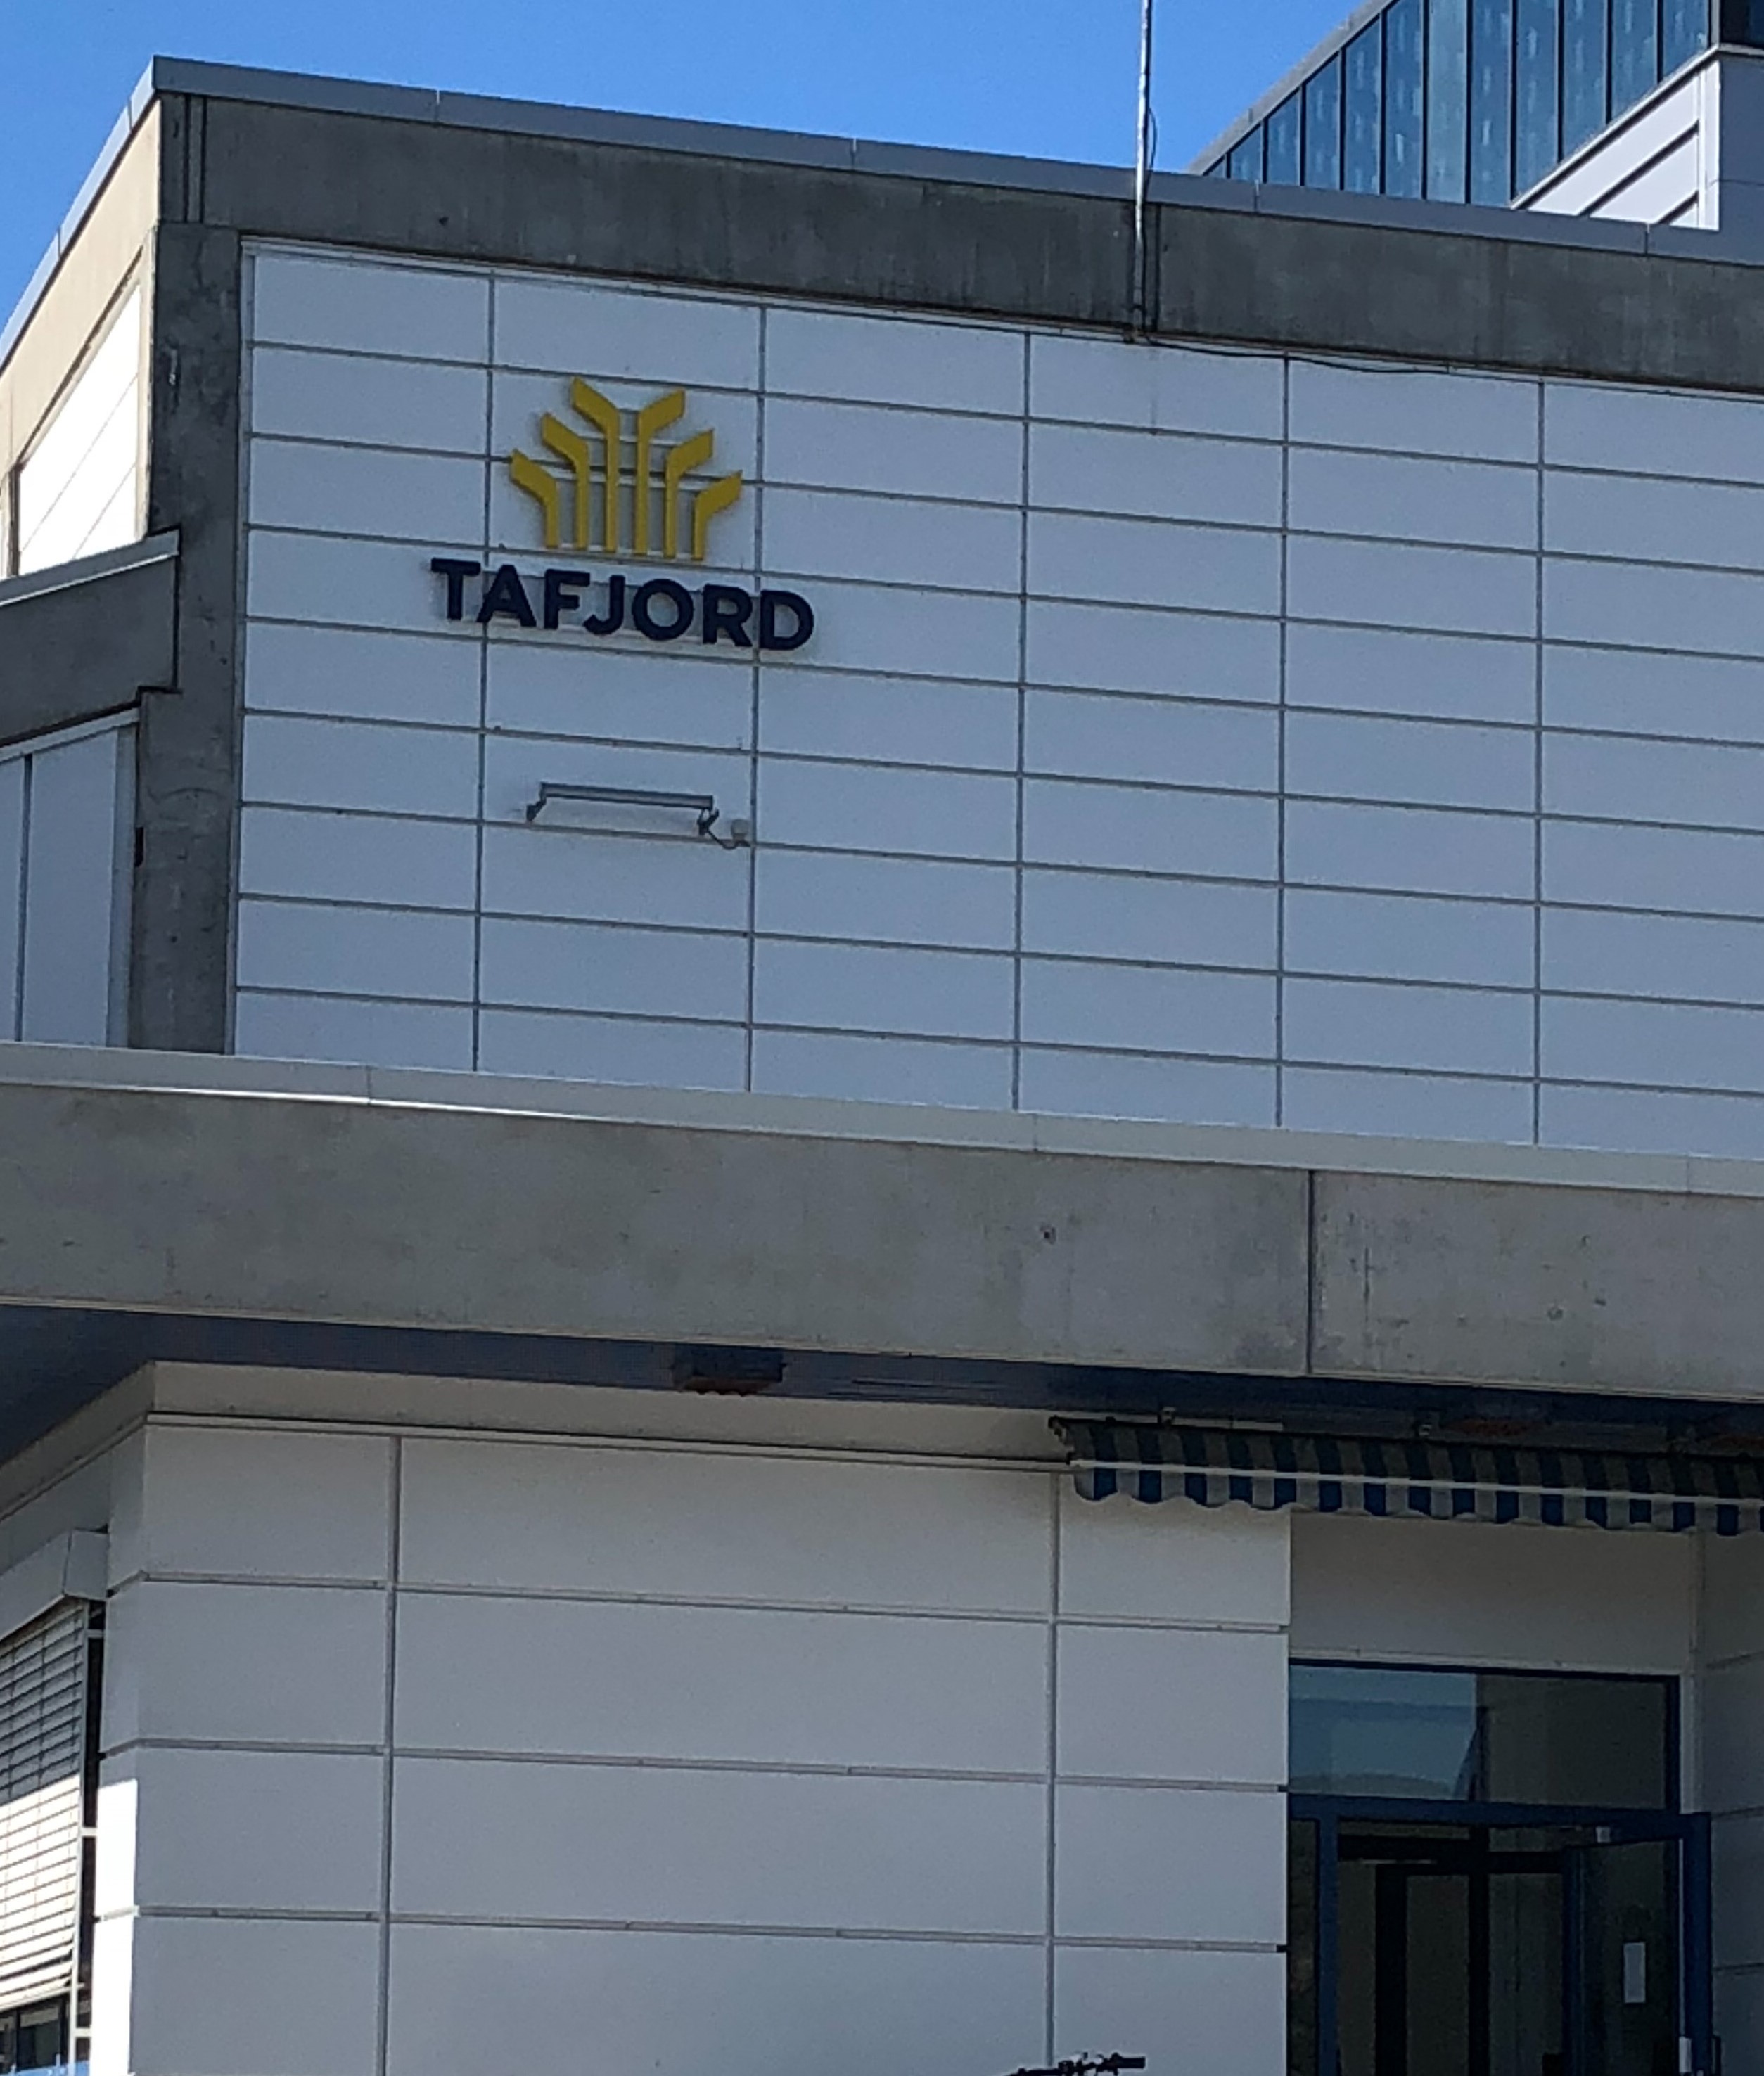 Tafjord WtE plant Entrance